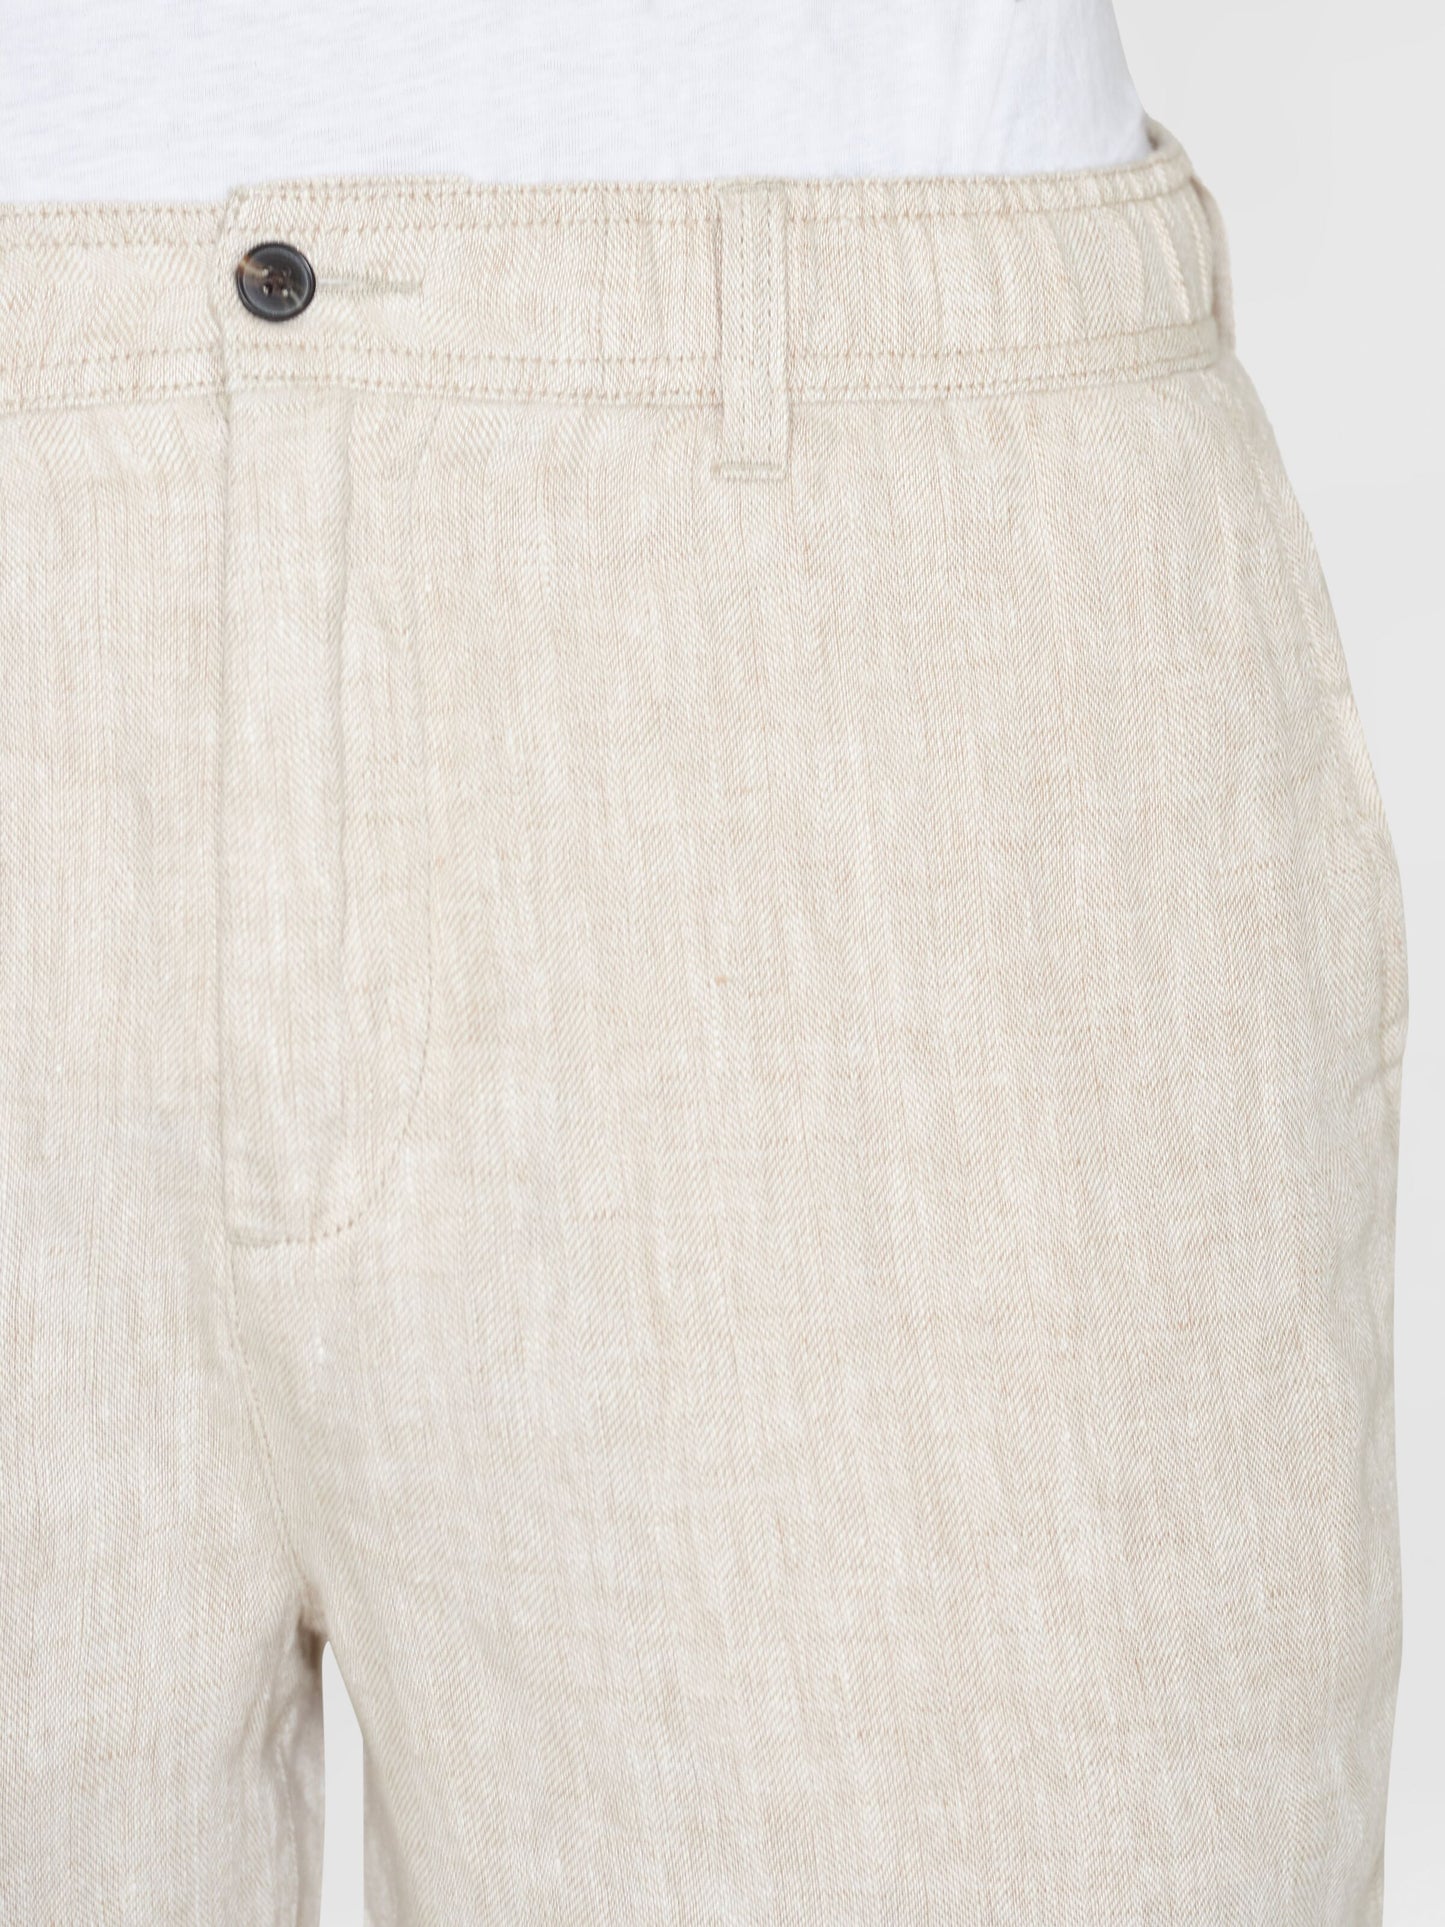 KCA - FIG loose herringbone linen elastic waist shorts Light feather gray